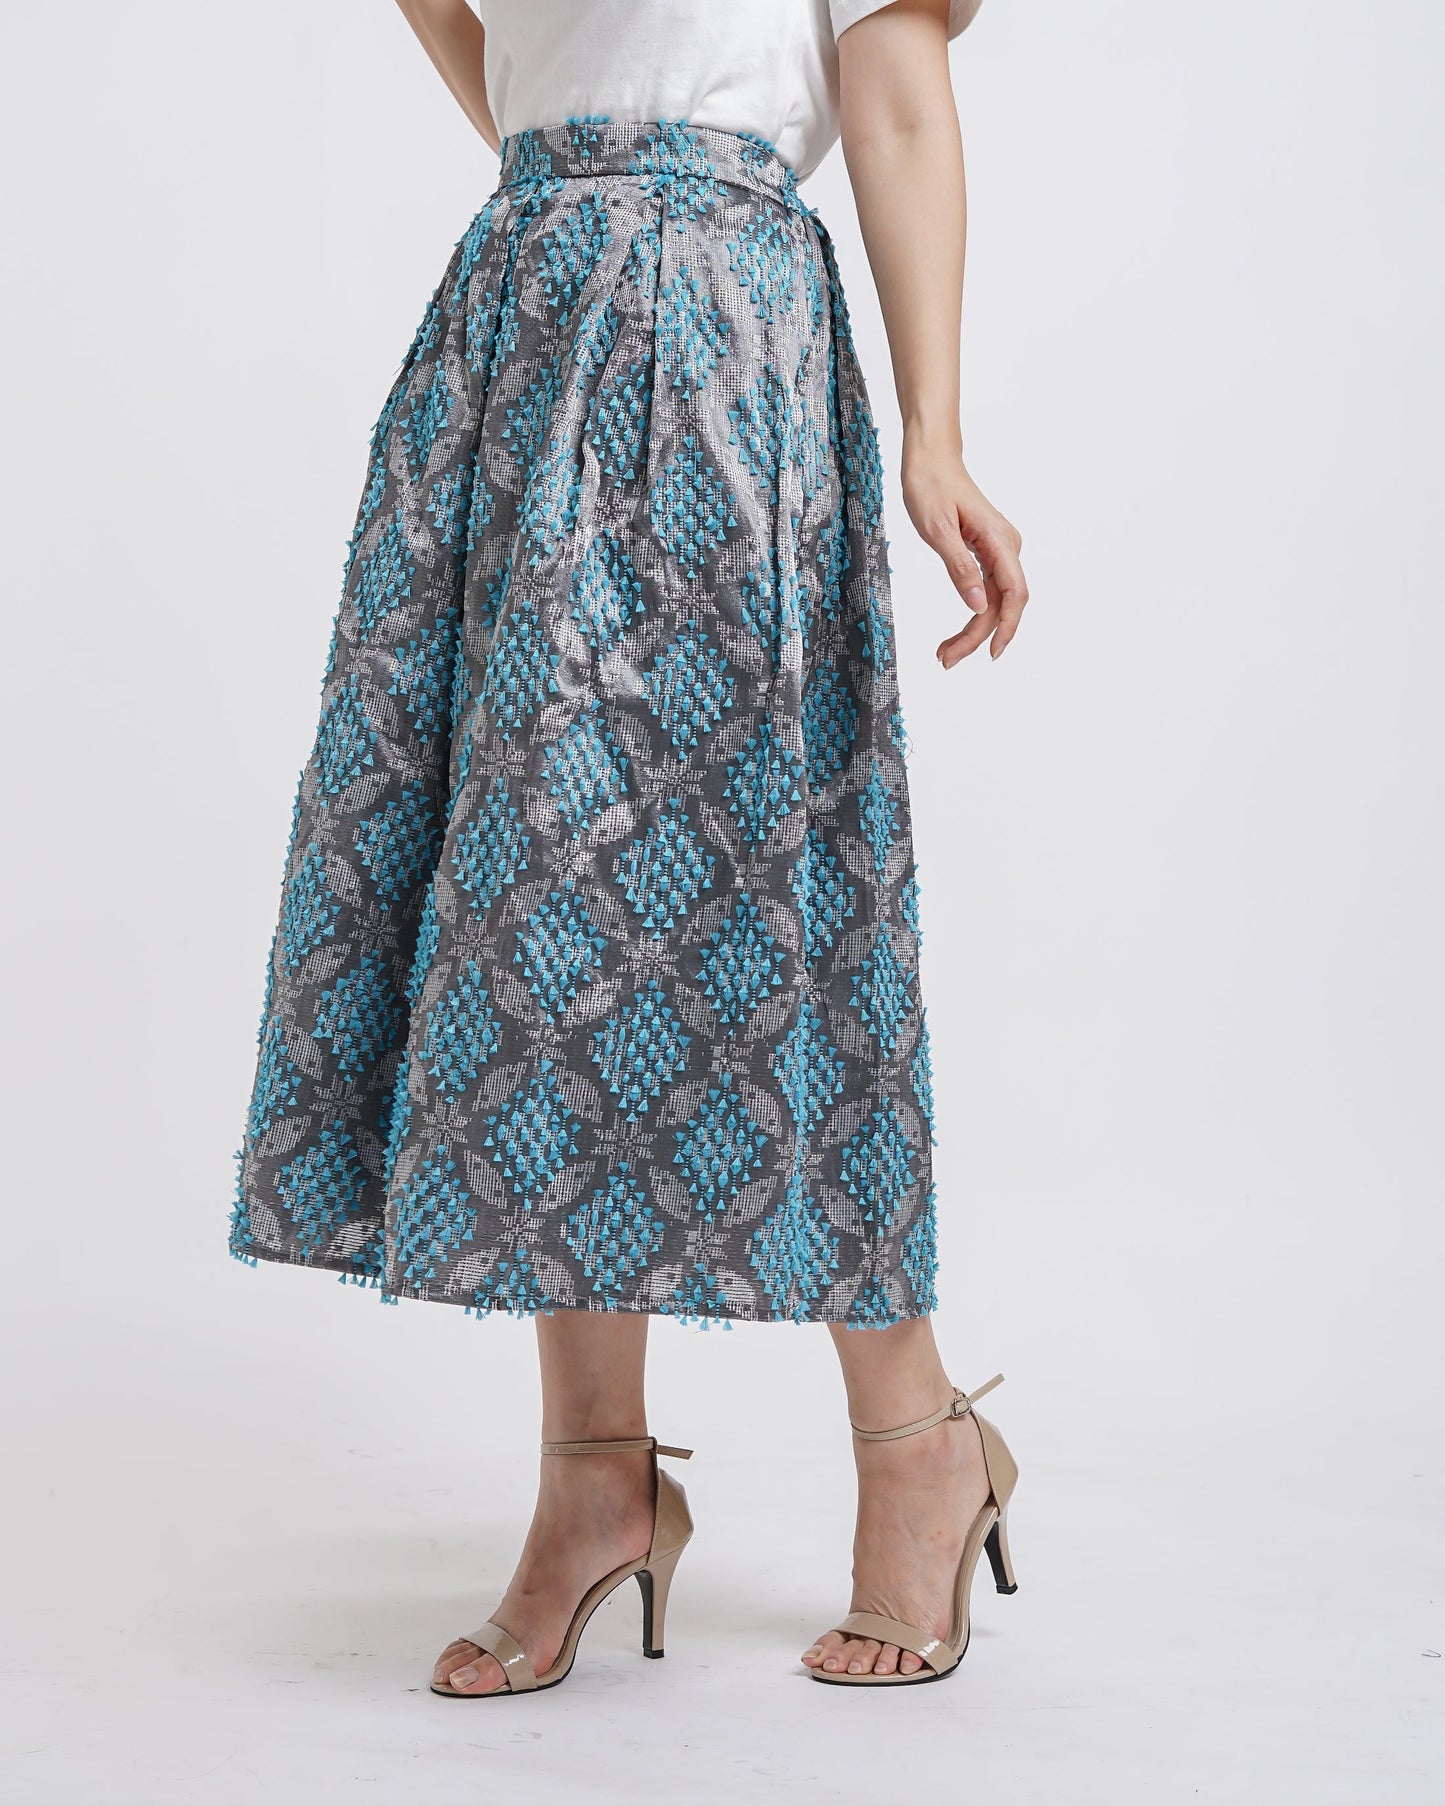 Vivienne A-Line tenun skirt grey blue